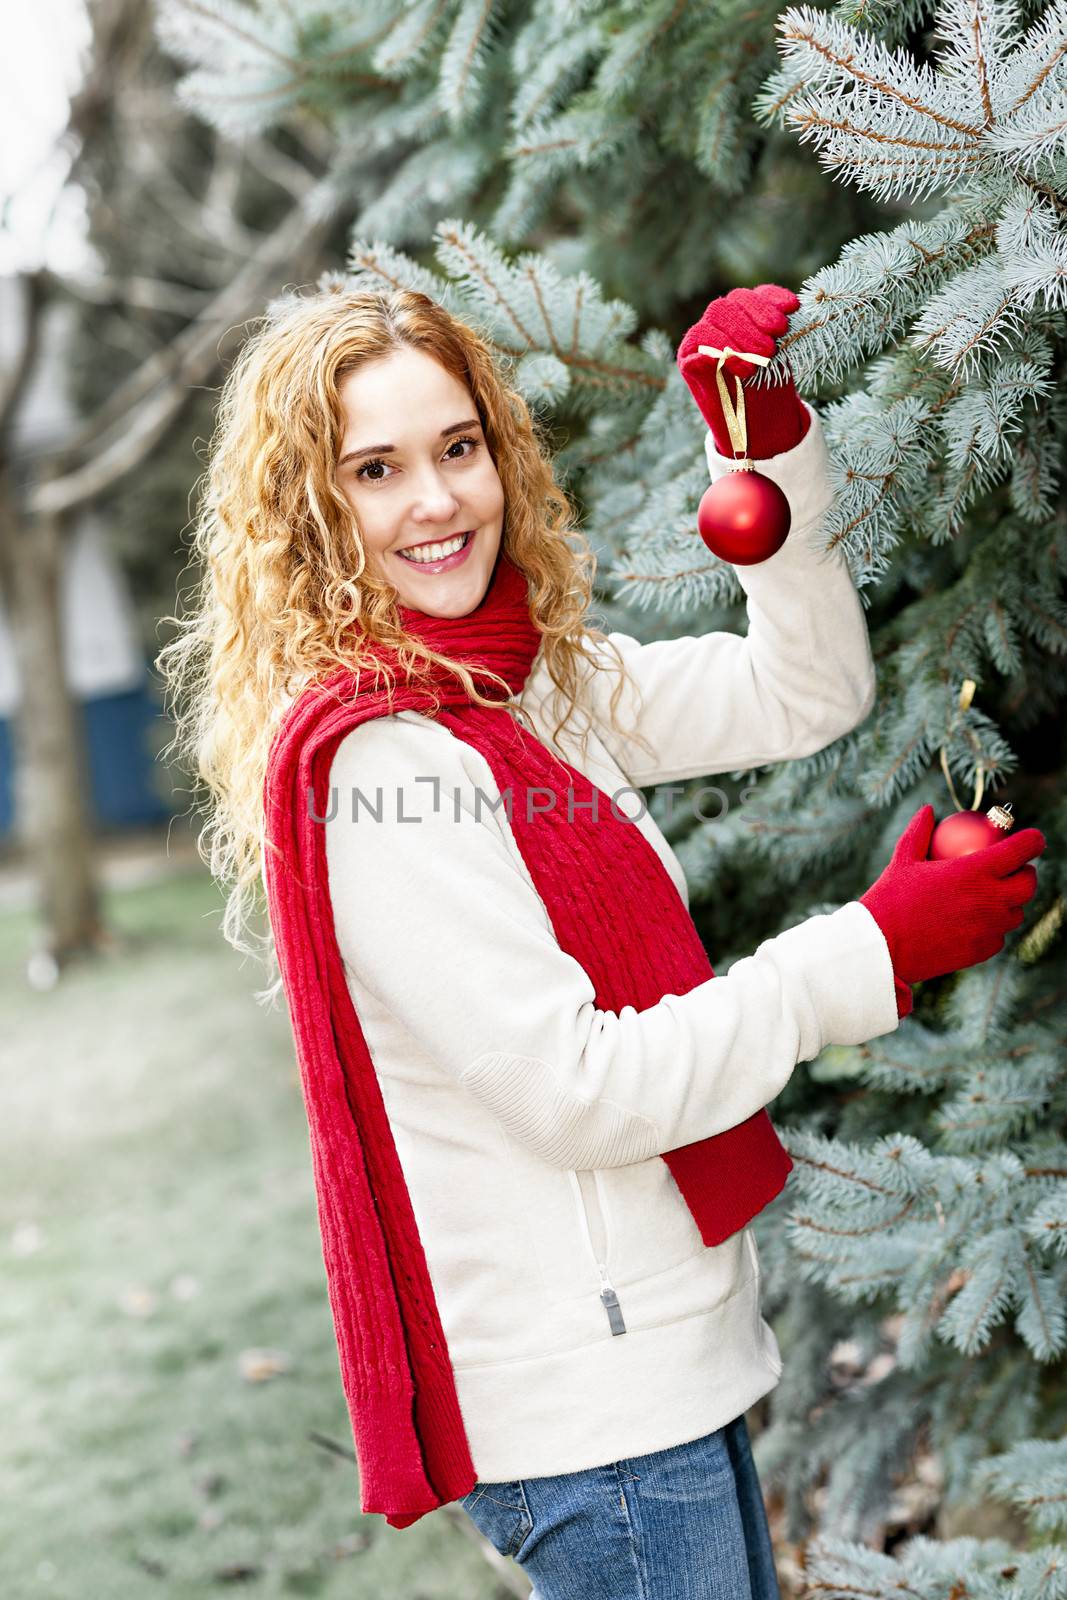 Joyful woman hanging Christmas ornaments on spruce tree outdoors in yard near home